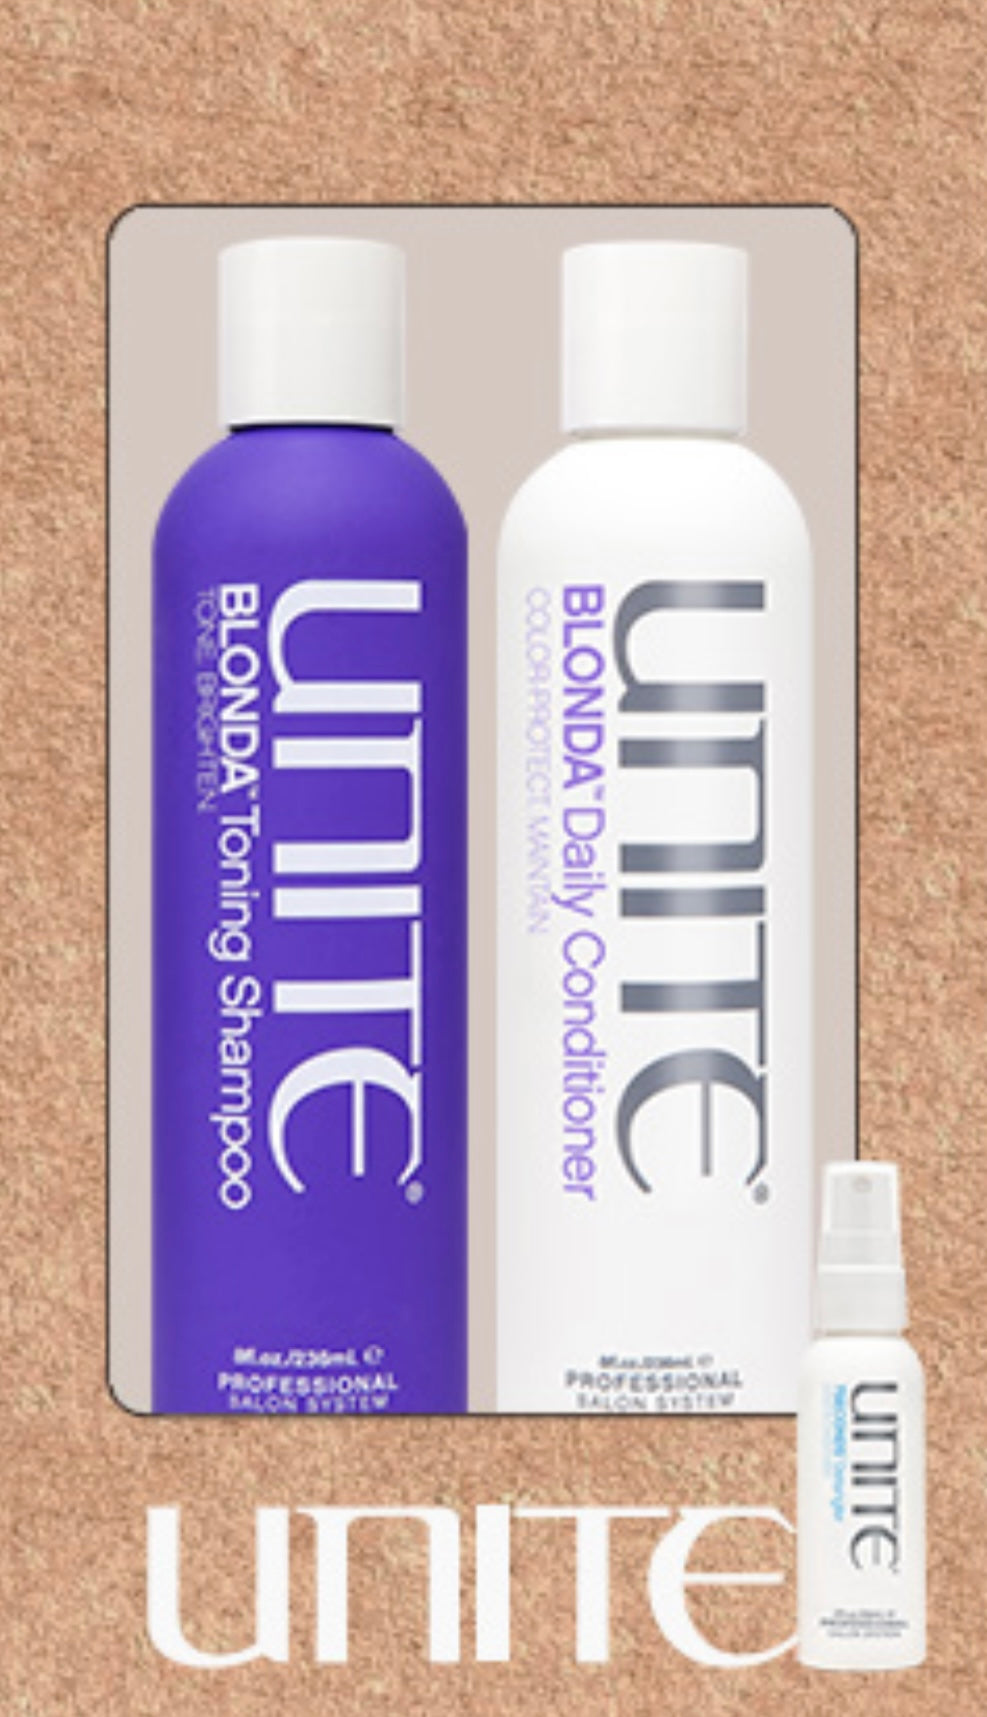 UNITE Blonda TONING Shampoo 236ml Conditioner 236ml plus Free Detangler sample size